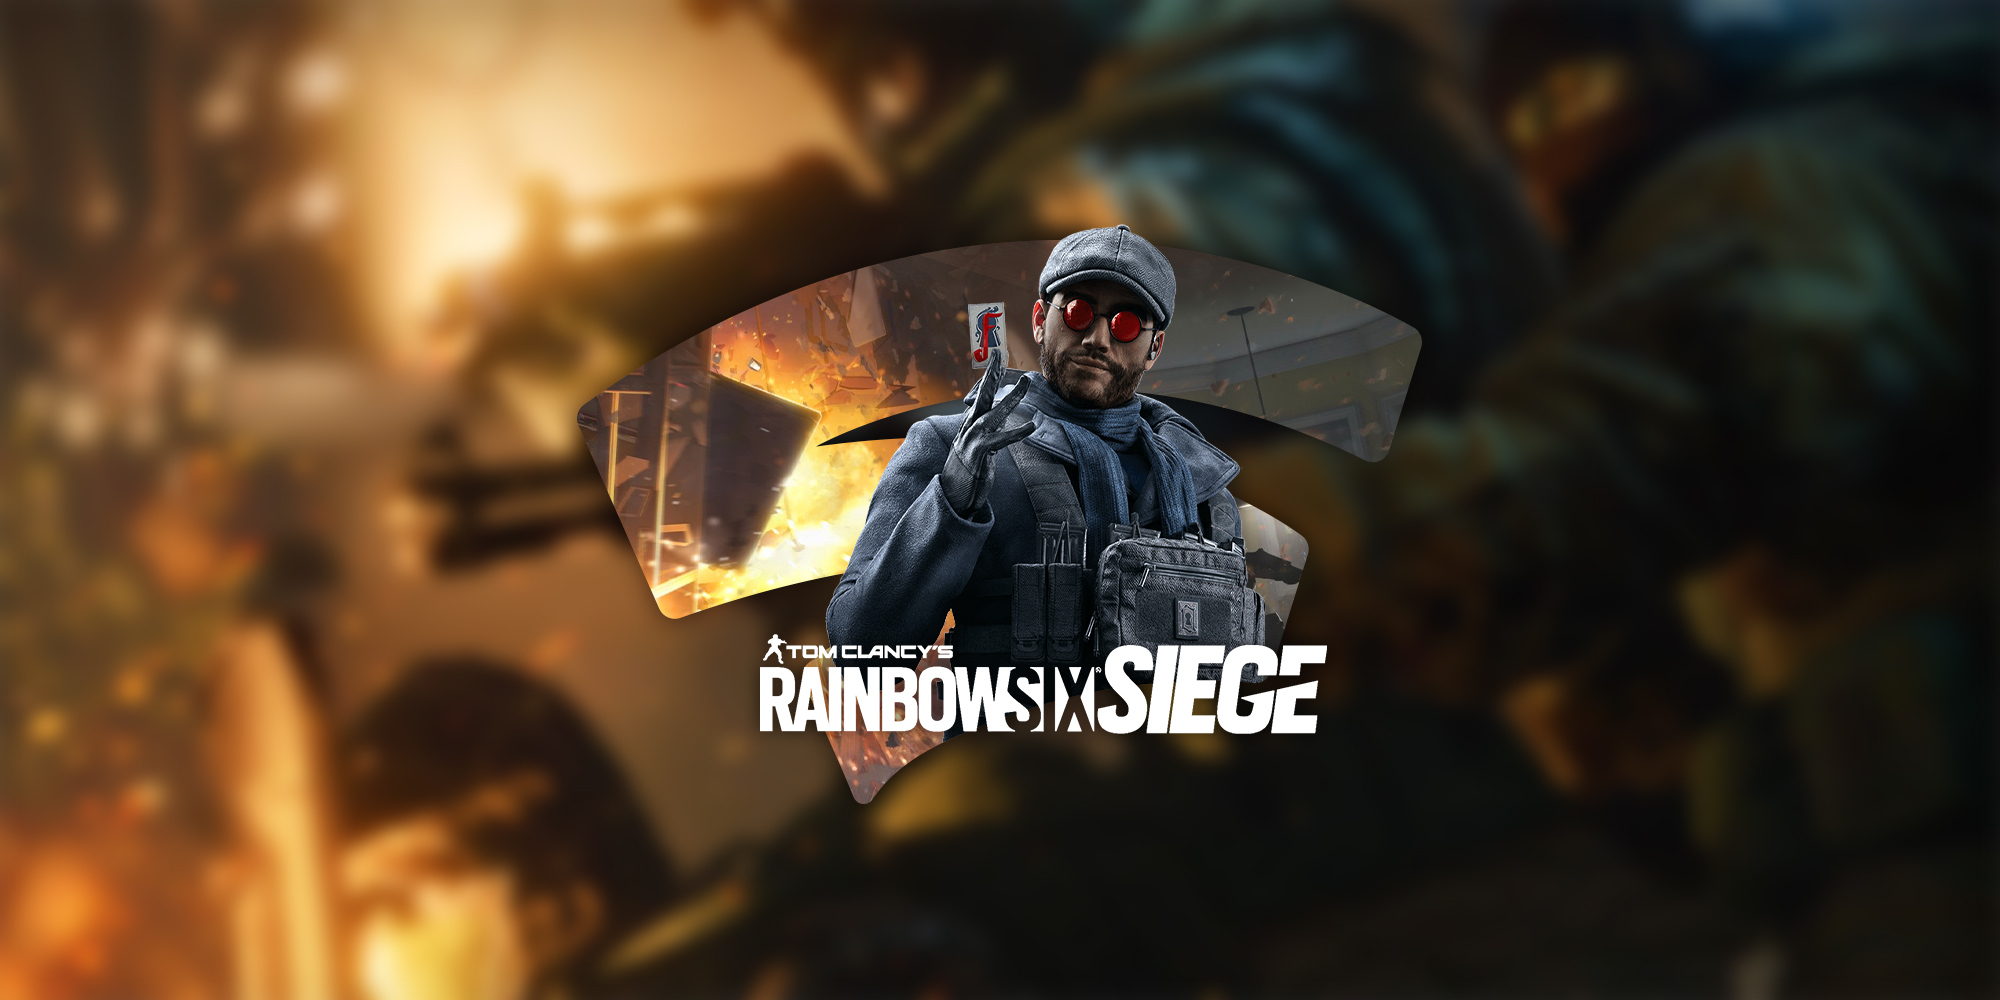 Rainbow Six Siege is finally getting crossplay starting on June 30